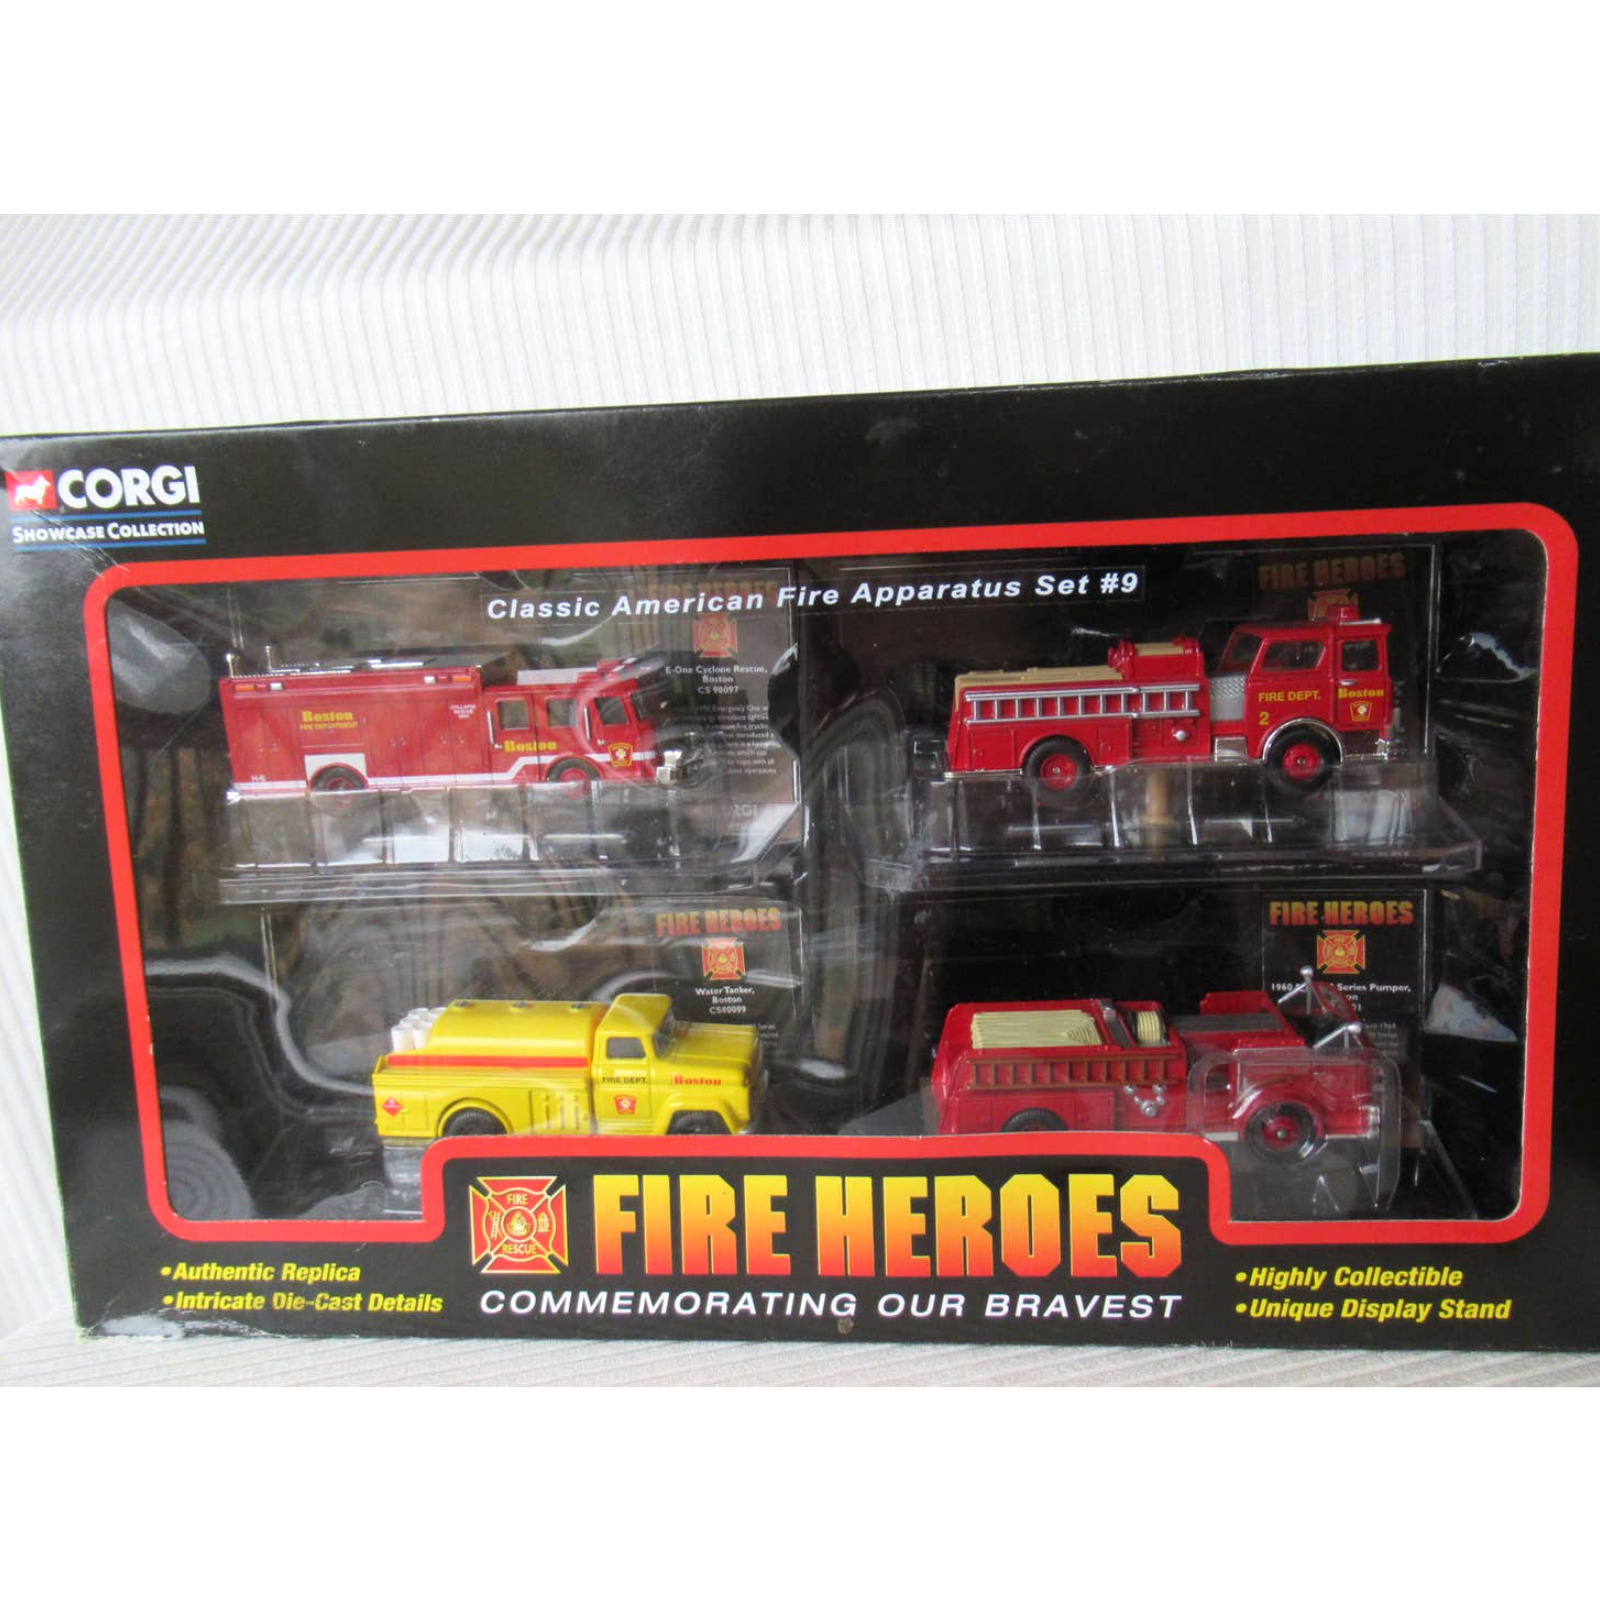 CORGI Showcase Collection Fire Heroes Engines Trucks Die Cast History CSFH08004